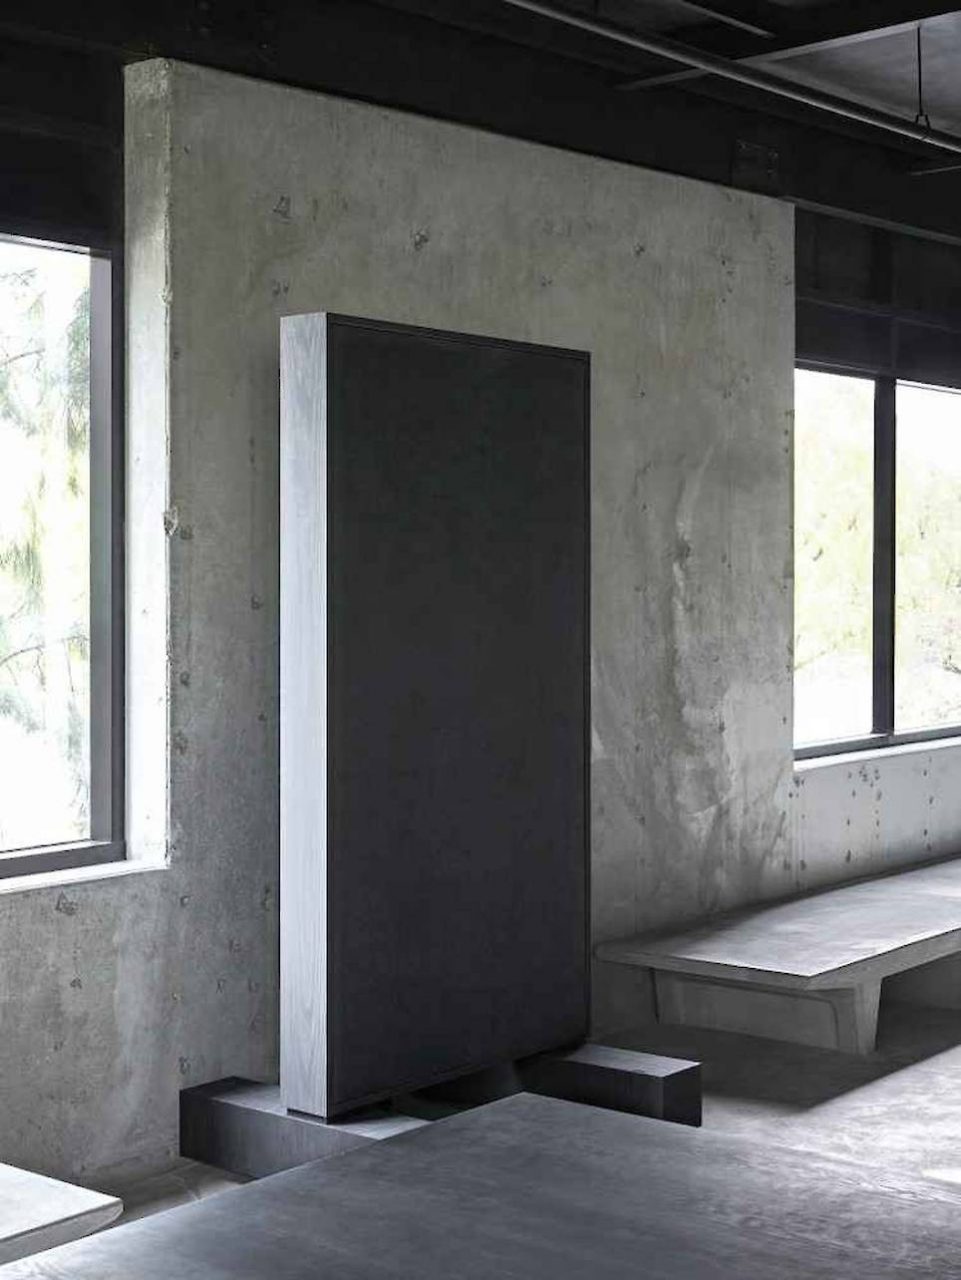 An upright black slab against concrete